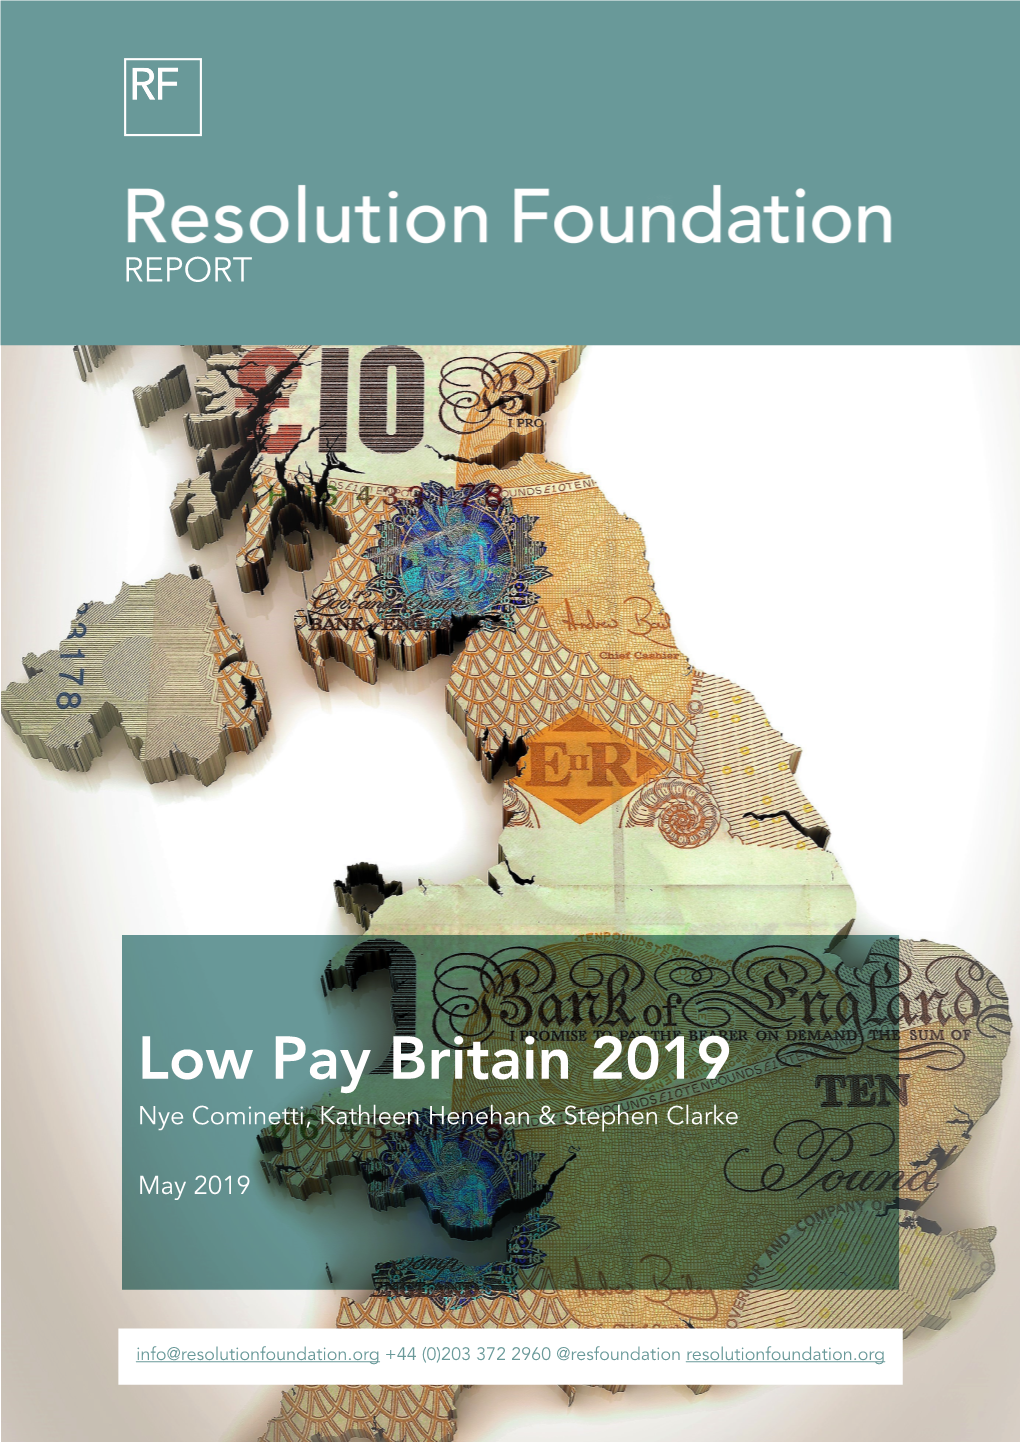 Low Pay Britain 2019 Nye Cominetti, Kathleen Henehan & Stephen Clarke